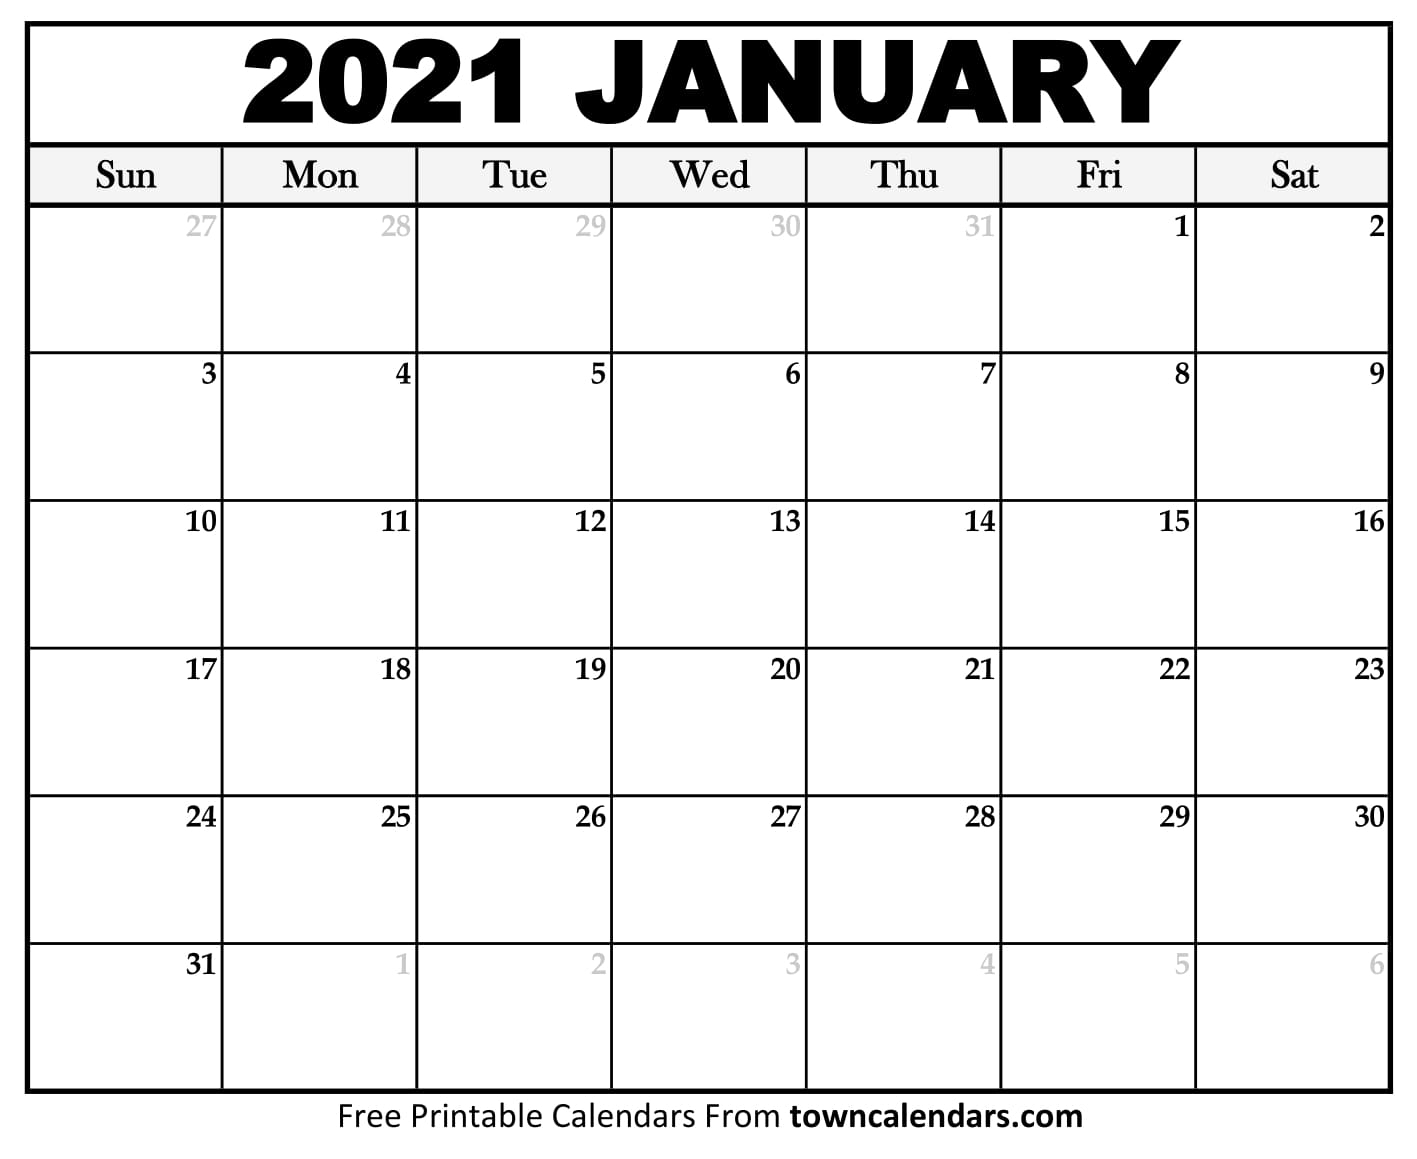 Printable January 2021 Calendar - Towncalendars